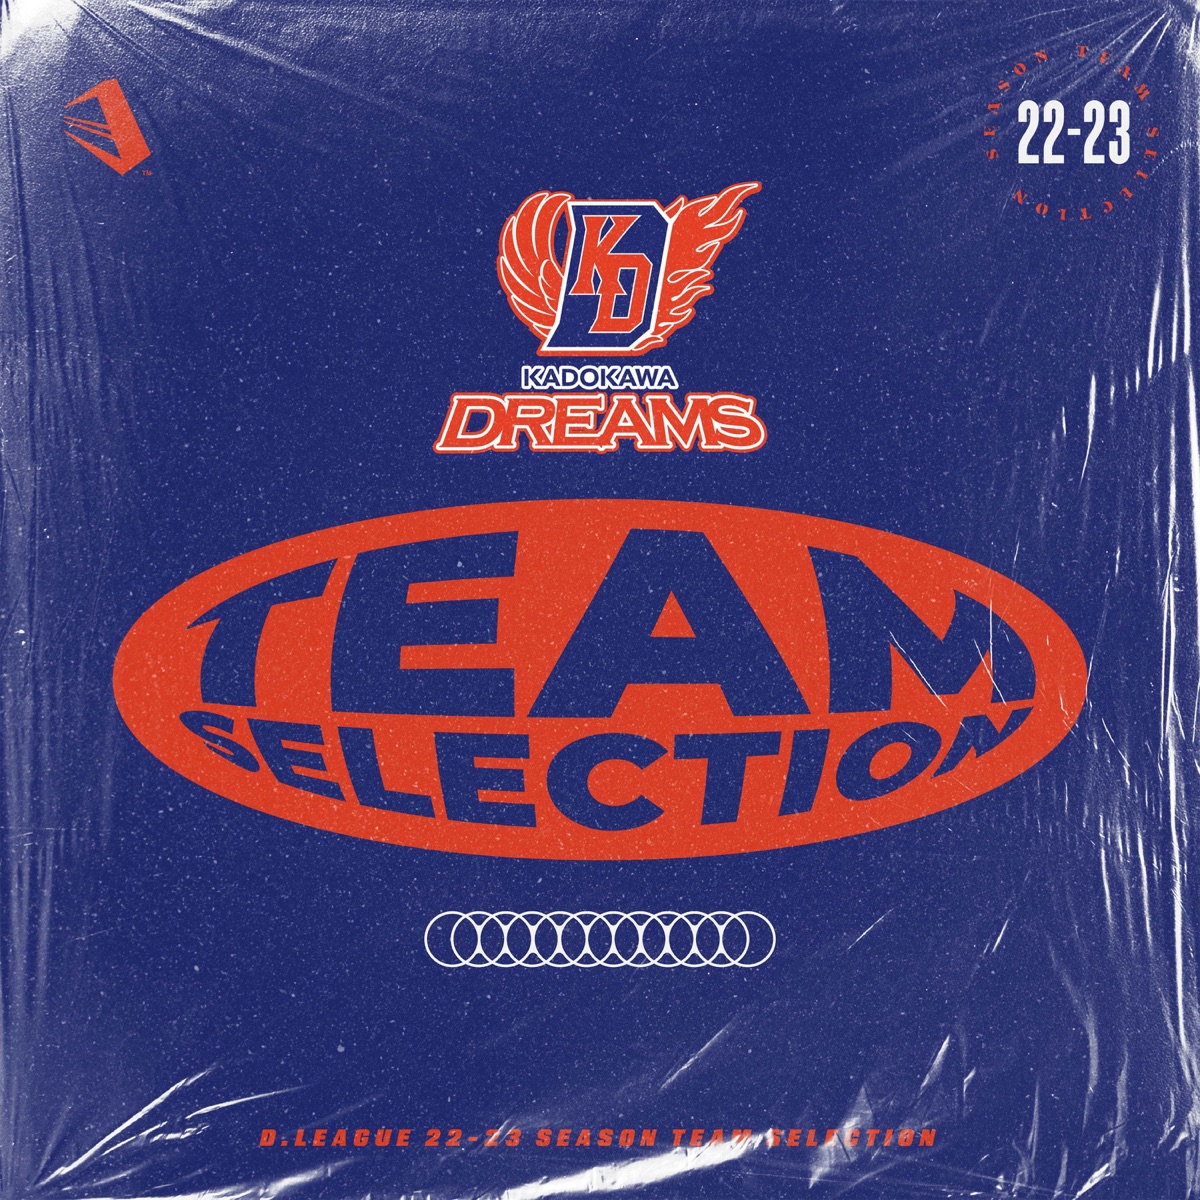 D.League 22 -23 Season - Team Selection - Album by KADOKAWA DREAMS